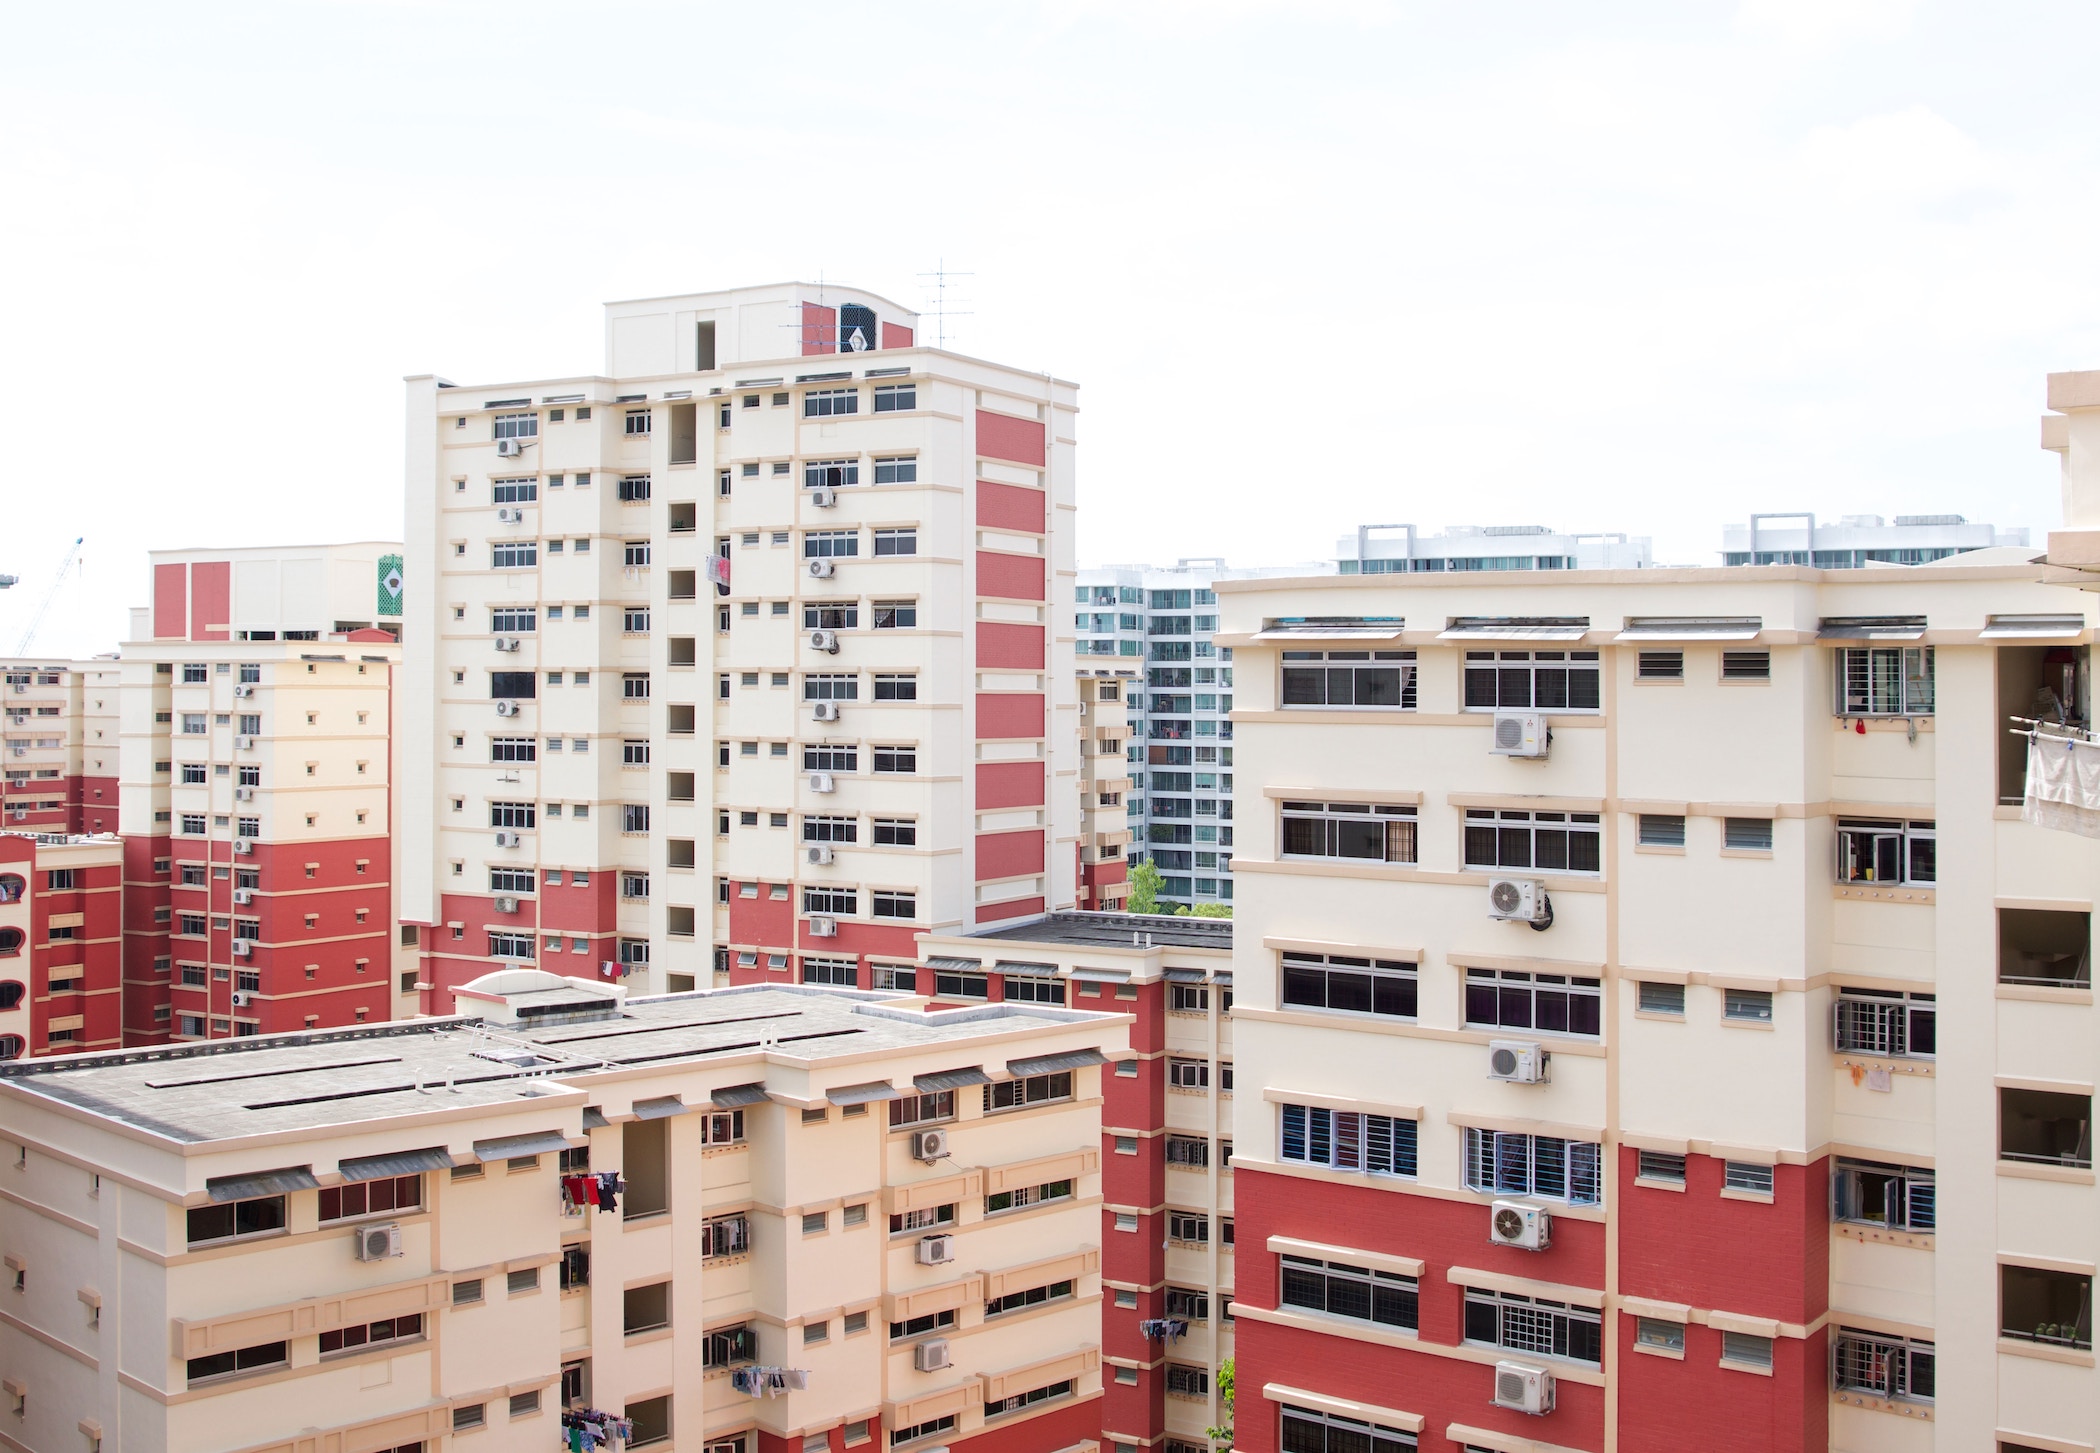 Blocks of flats in Singapore